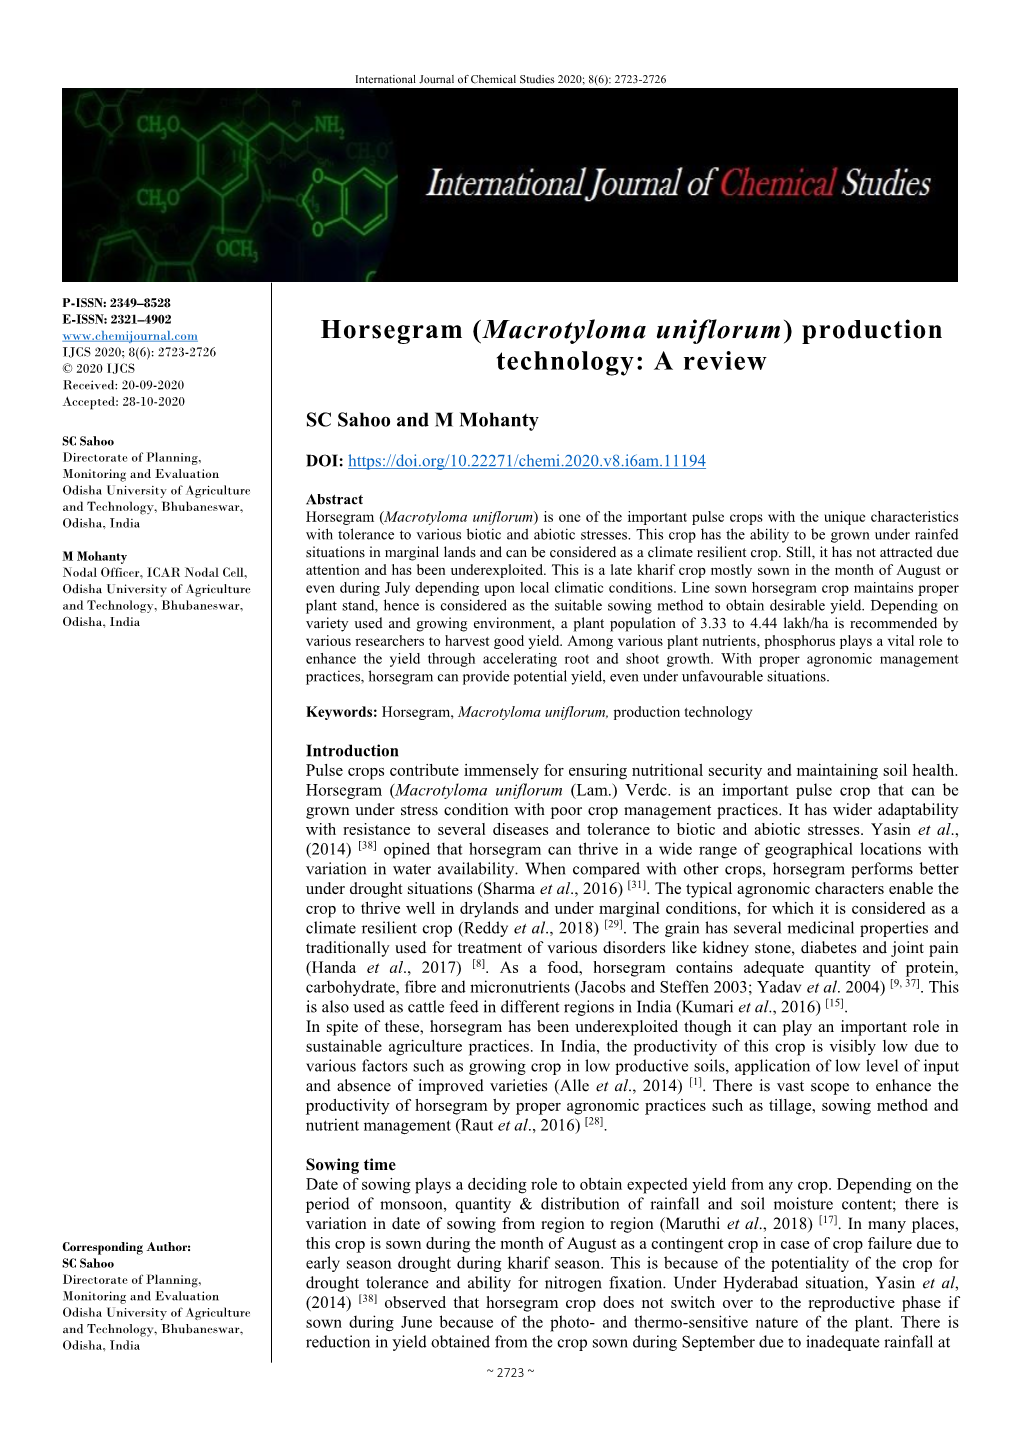 Horsegram (Macrotyloma Uniflorum) Production Technology: a Review